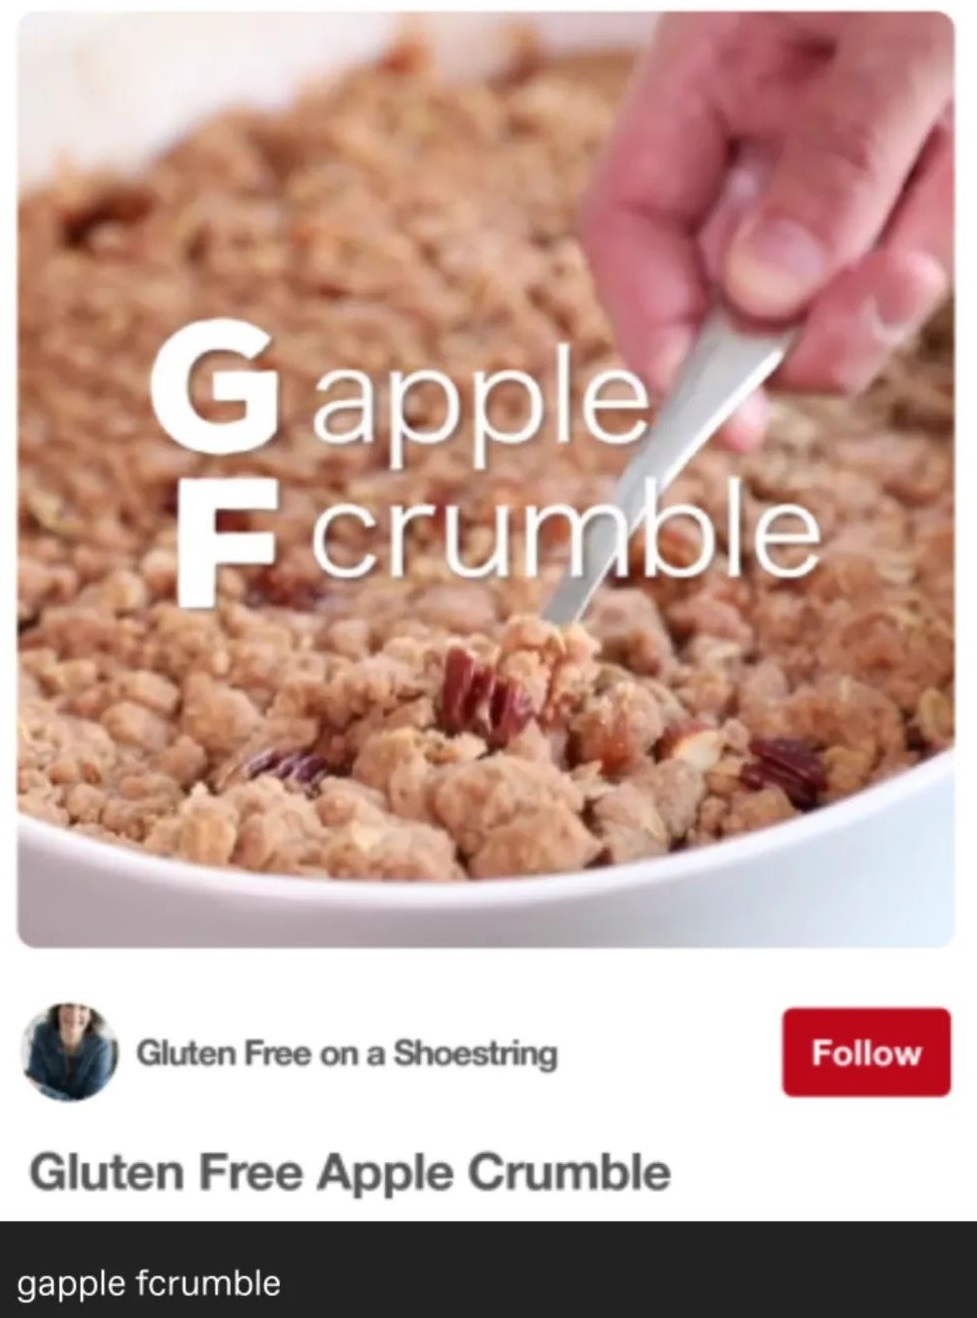 gluten free apple crumble recipe that looks like it reads gapple fcrumble